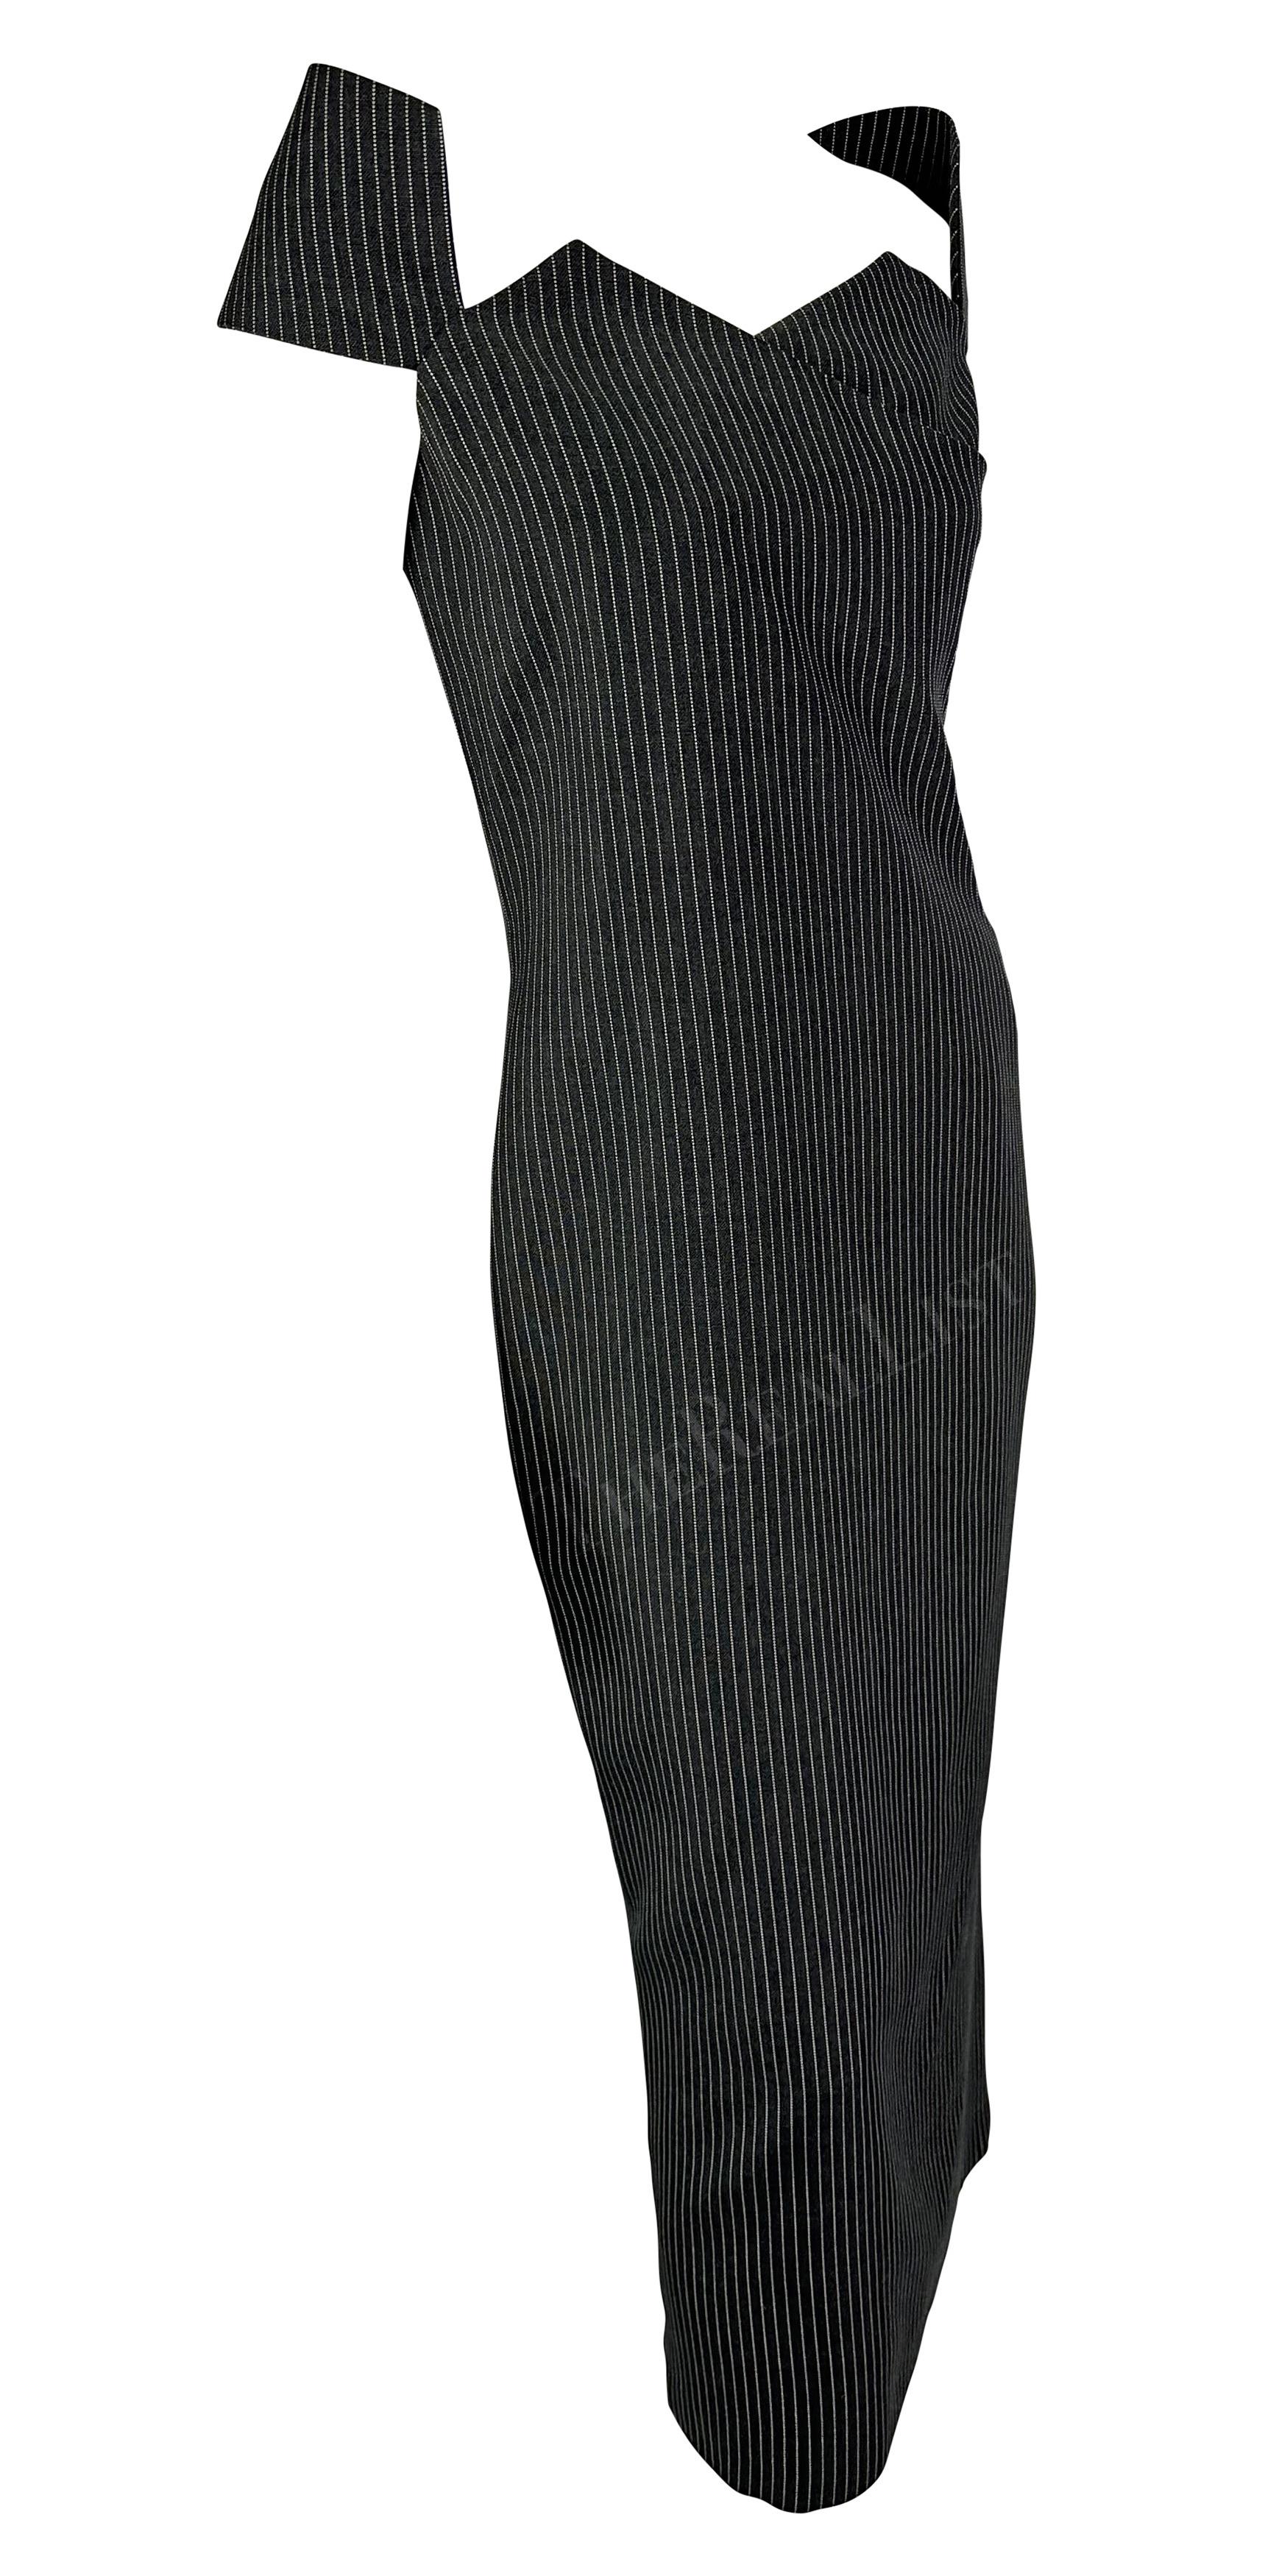 S/S 1996 Gianfranco Ferré Runway Grey Charcoal Pinstripe Off-Shoulder Dress For Sale 2